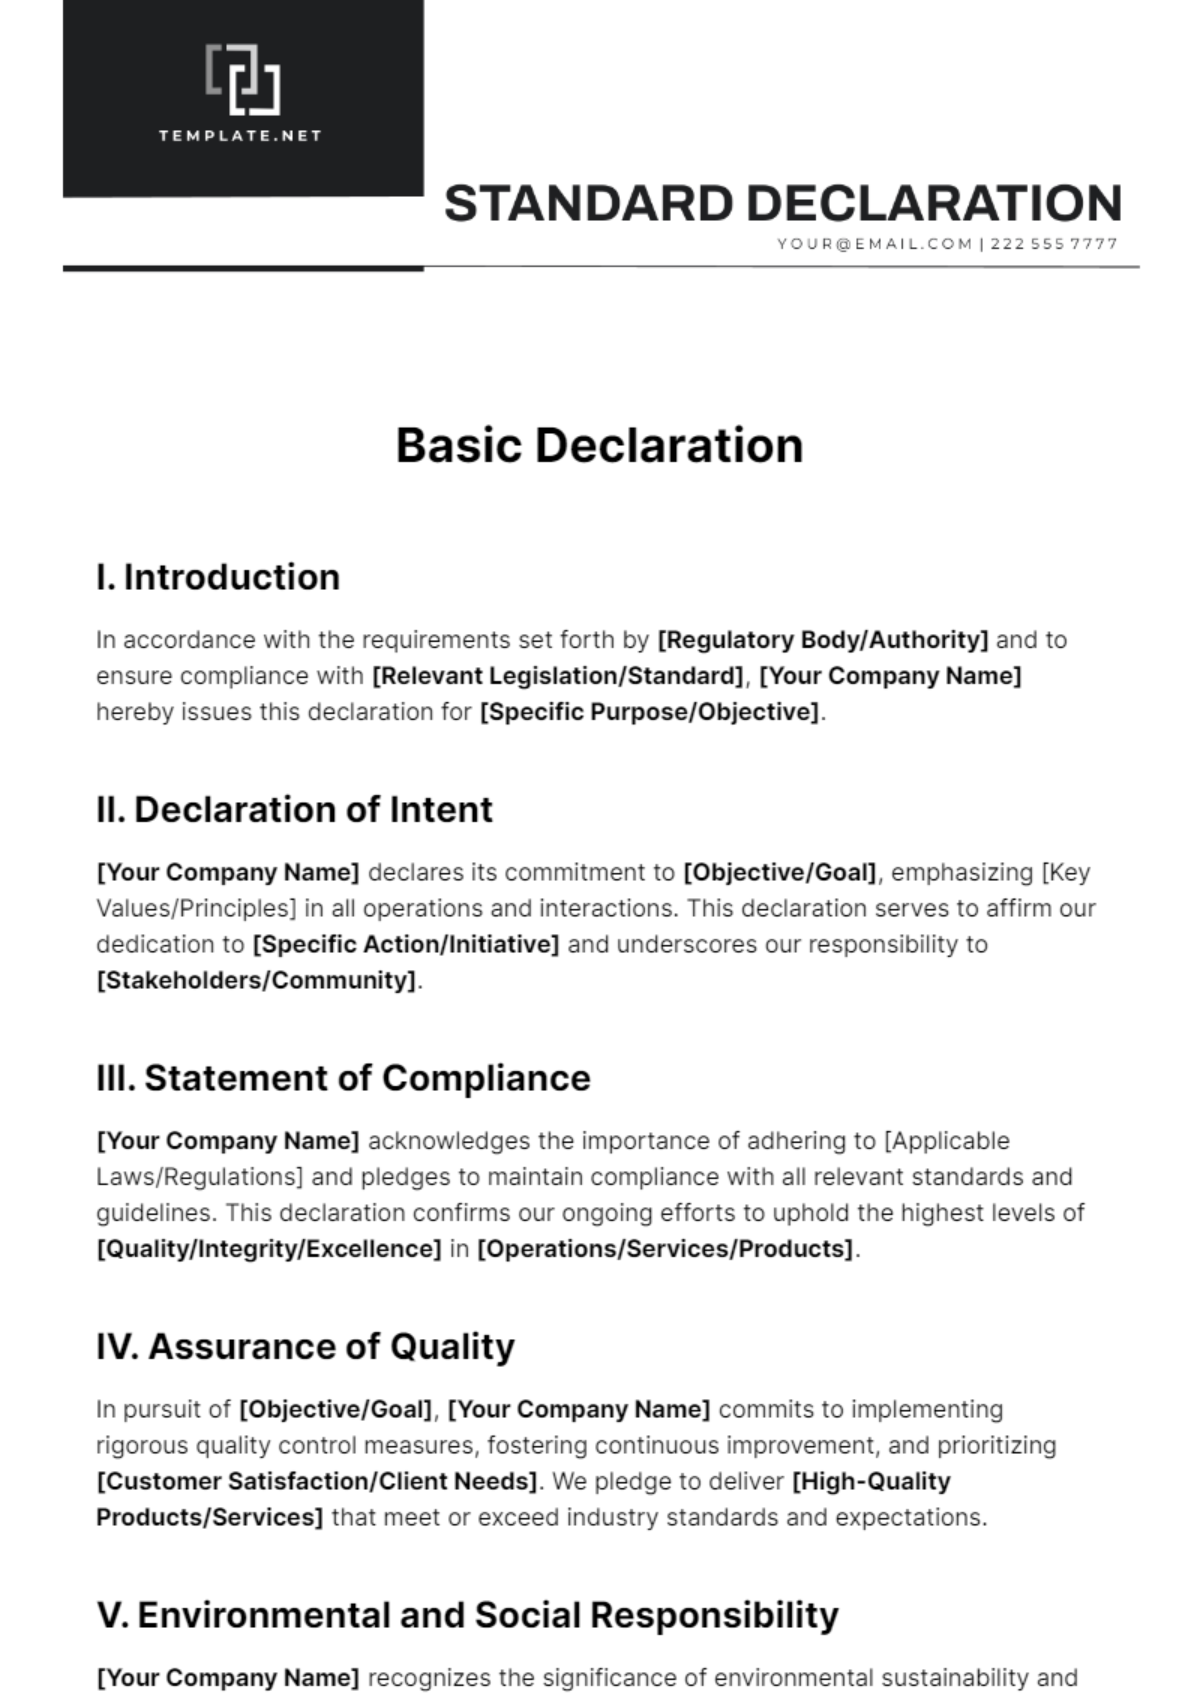 Basic Declaration Template